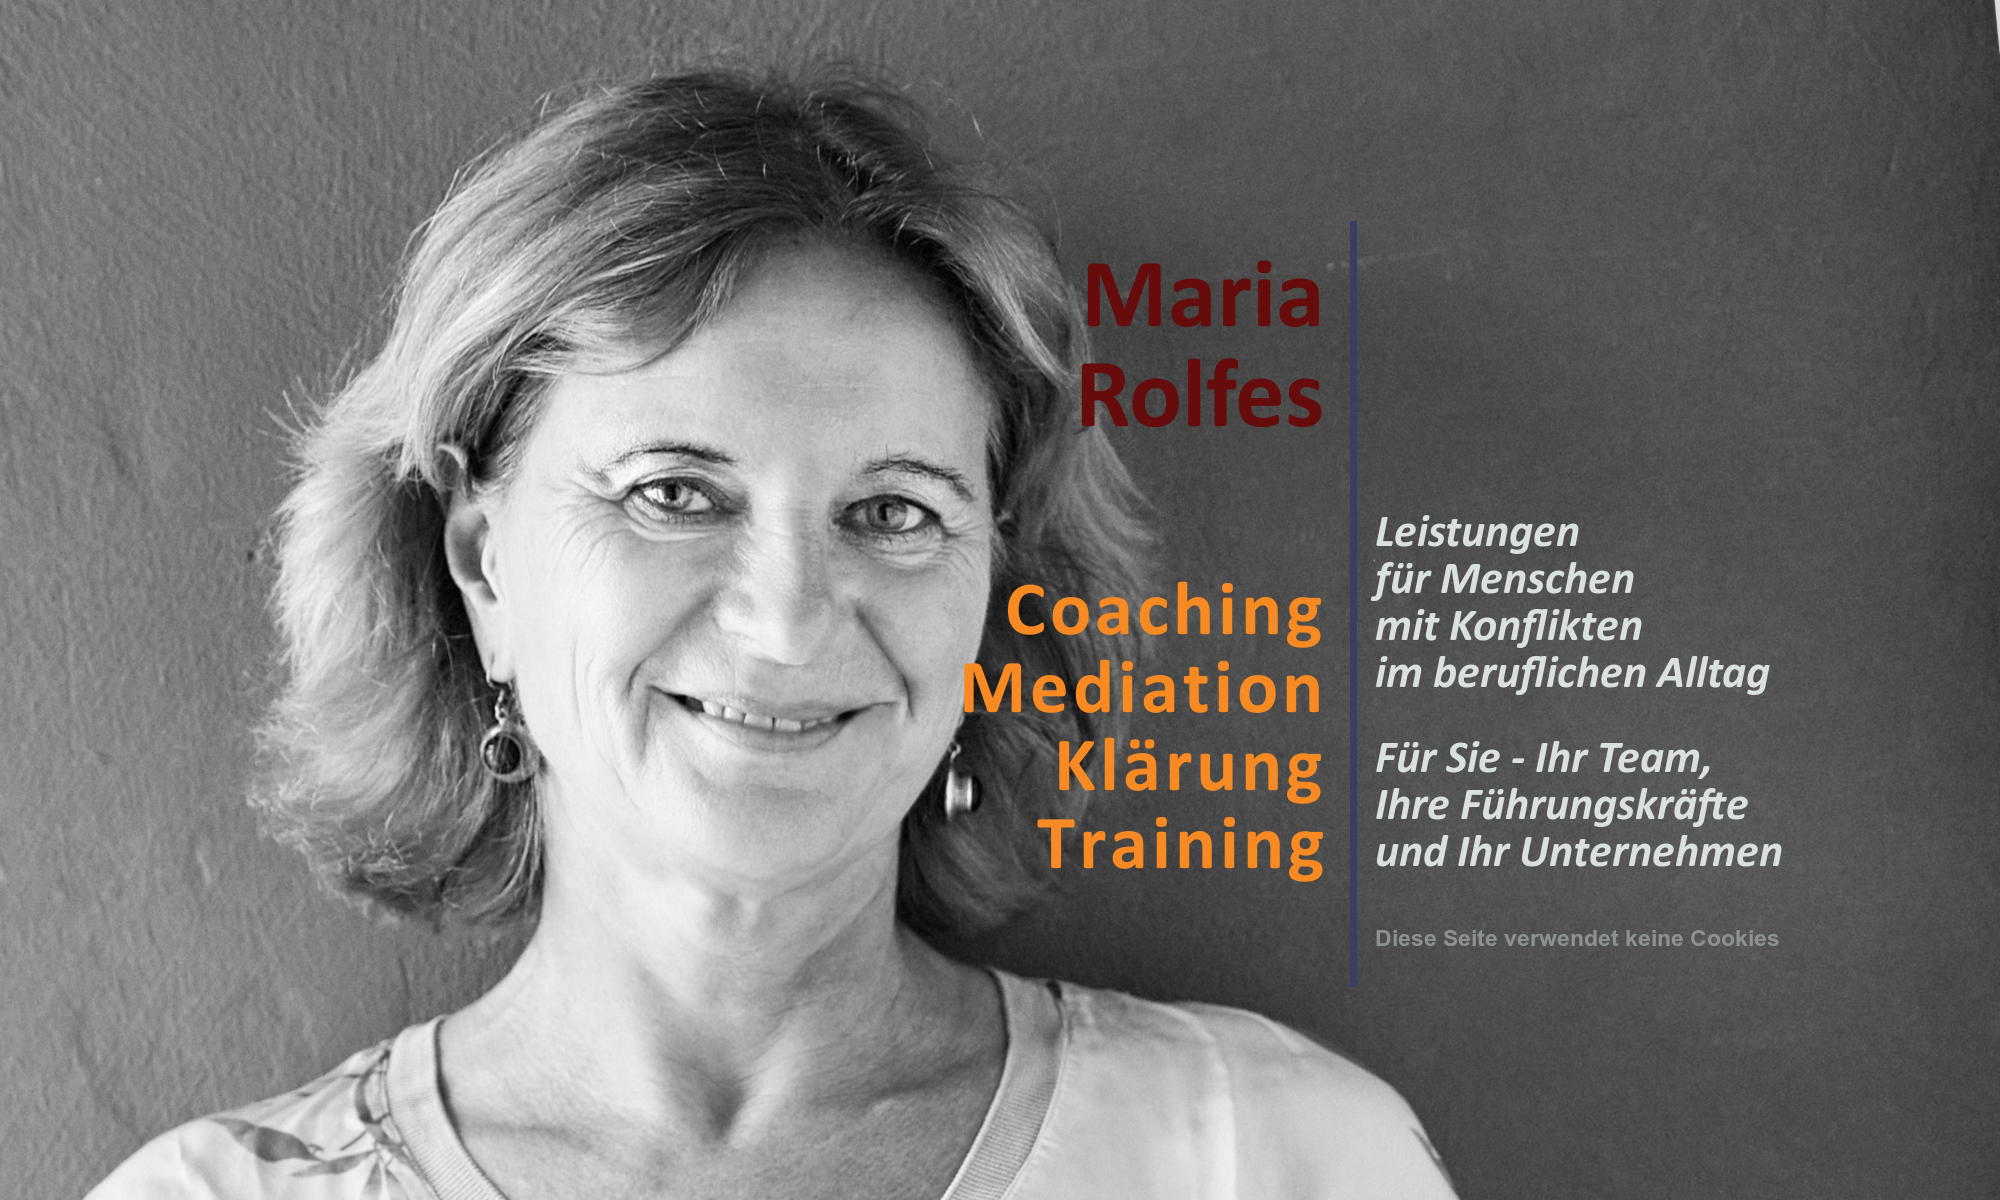 Maria Rolfes